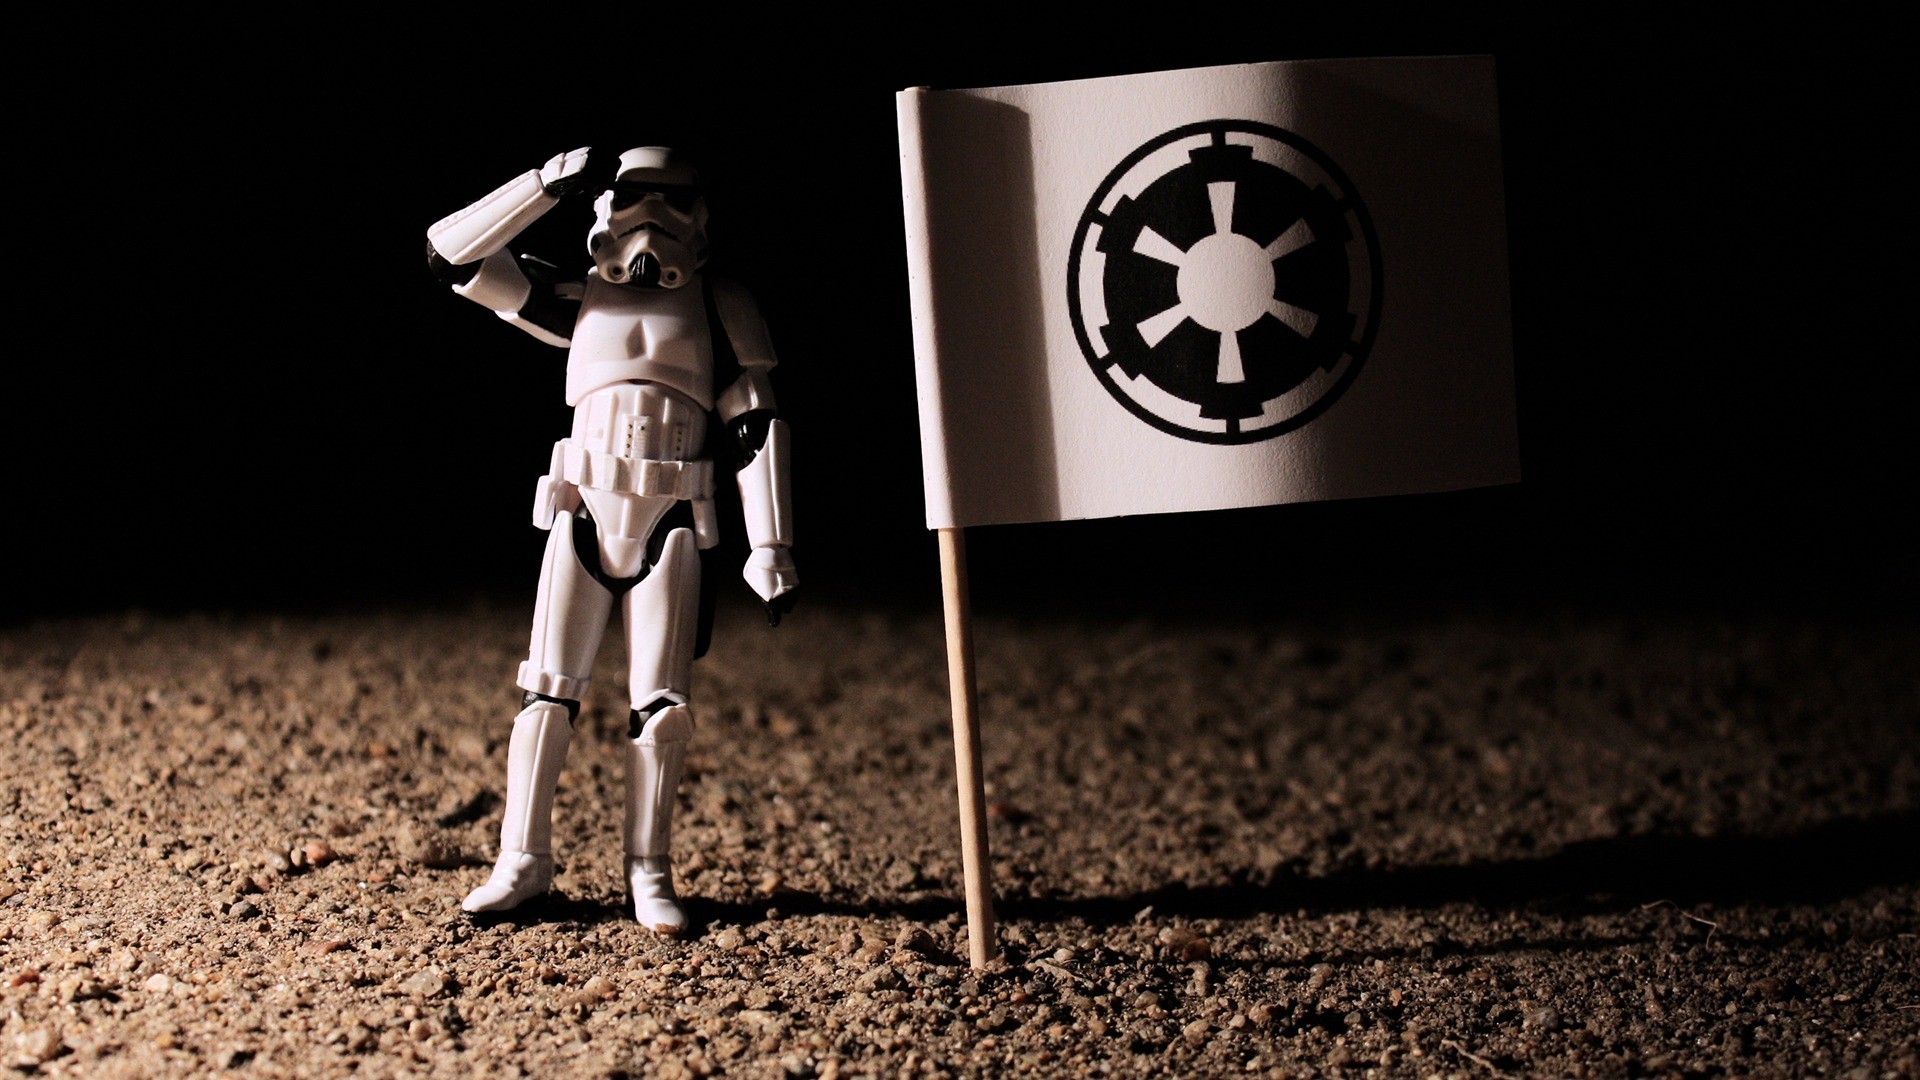 Greetings from the moon Imperial Stormtrooper series desktop wallpaper – wallpaper download